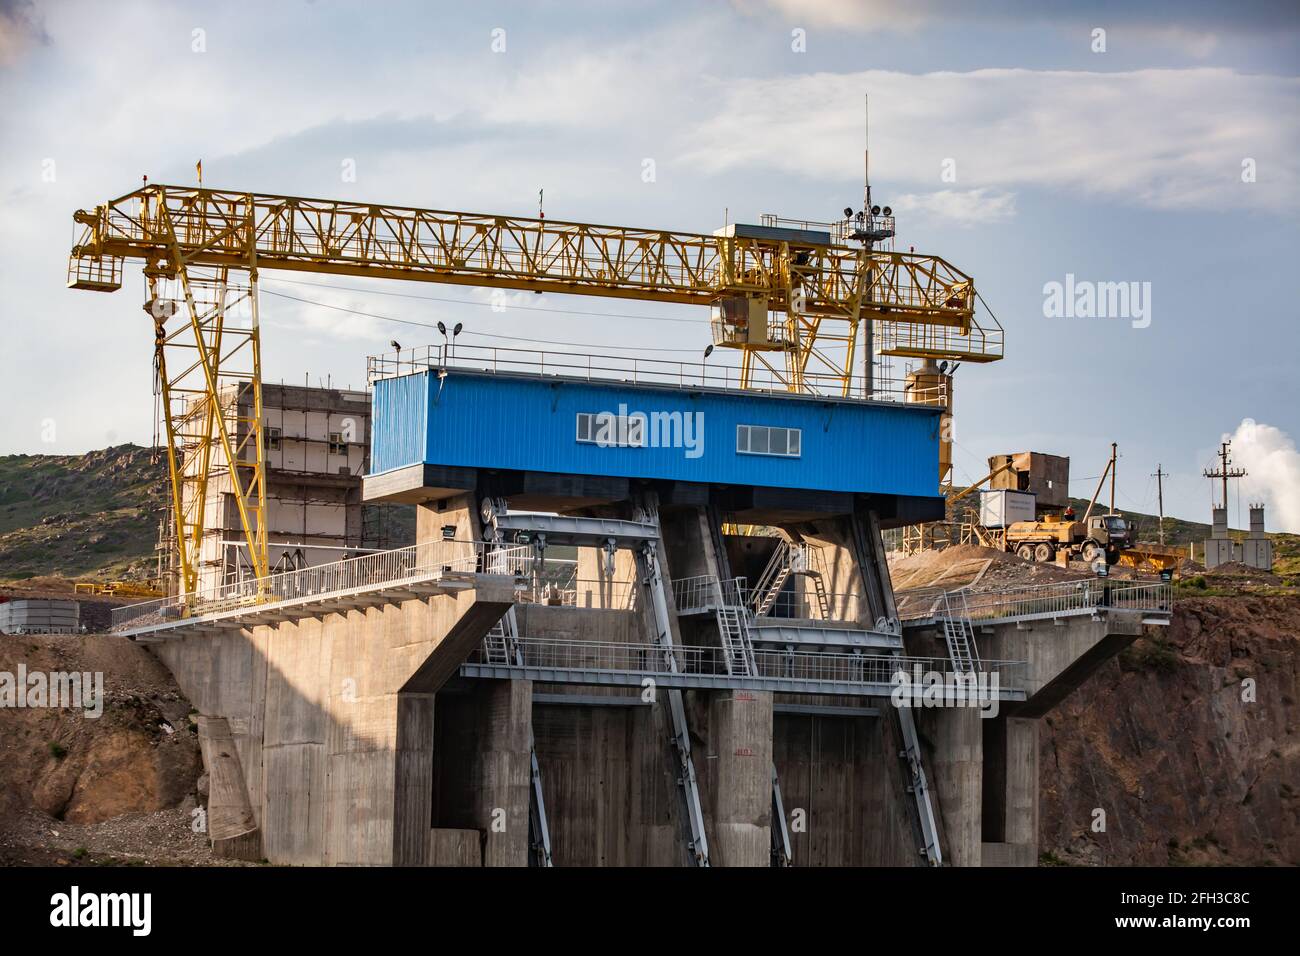 Dam on Sharyn river. Close up photo. Blue machine house, yellow gantry crane. Blue sky with clouds background. Almaty region, Kazakhstan. Stock Photo